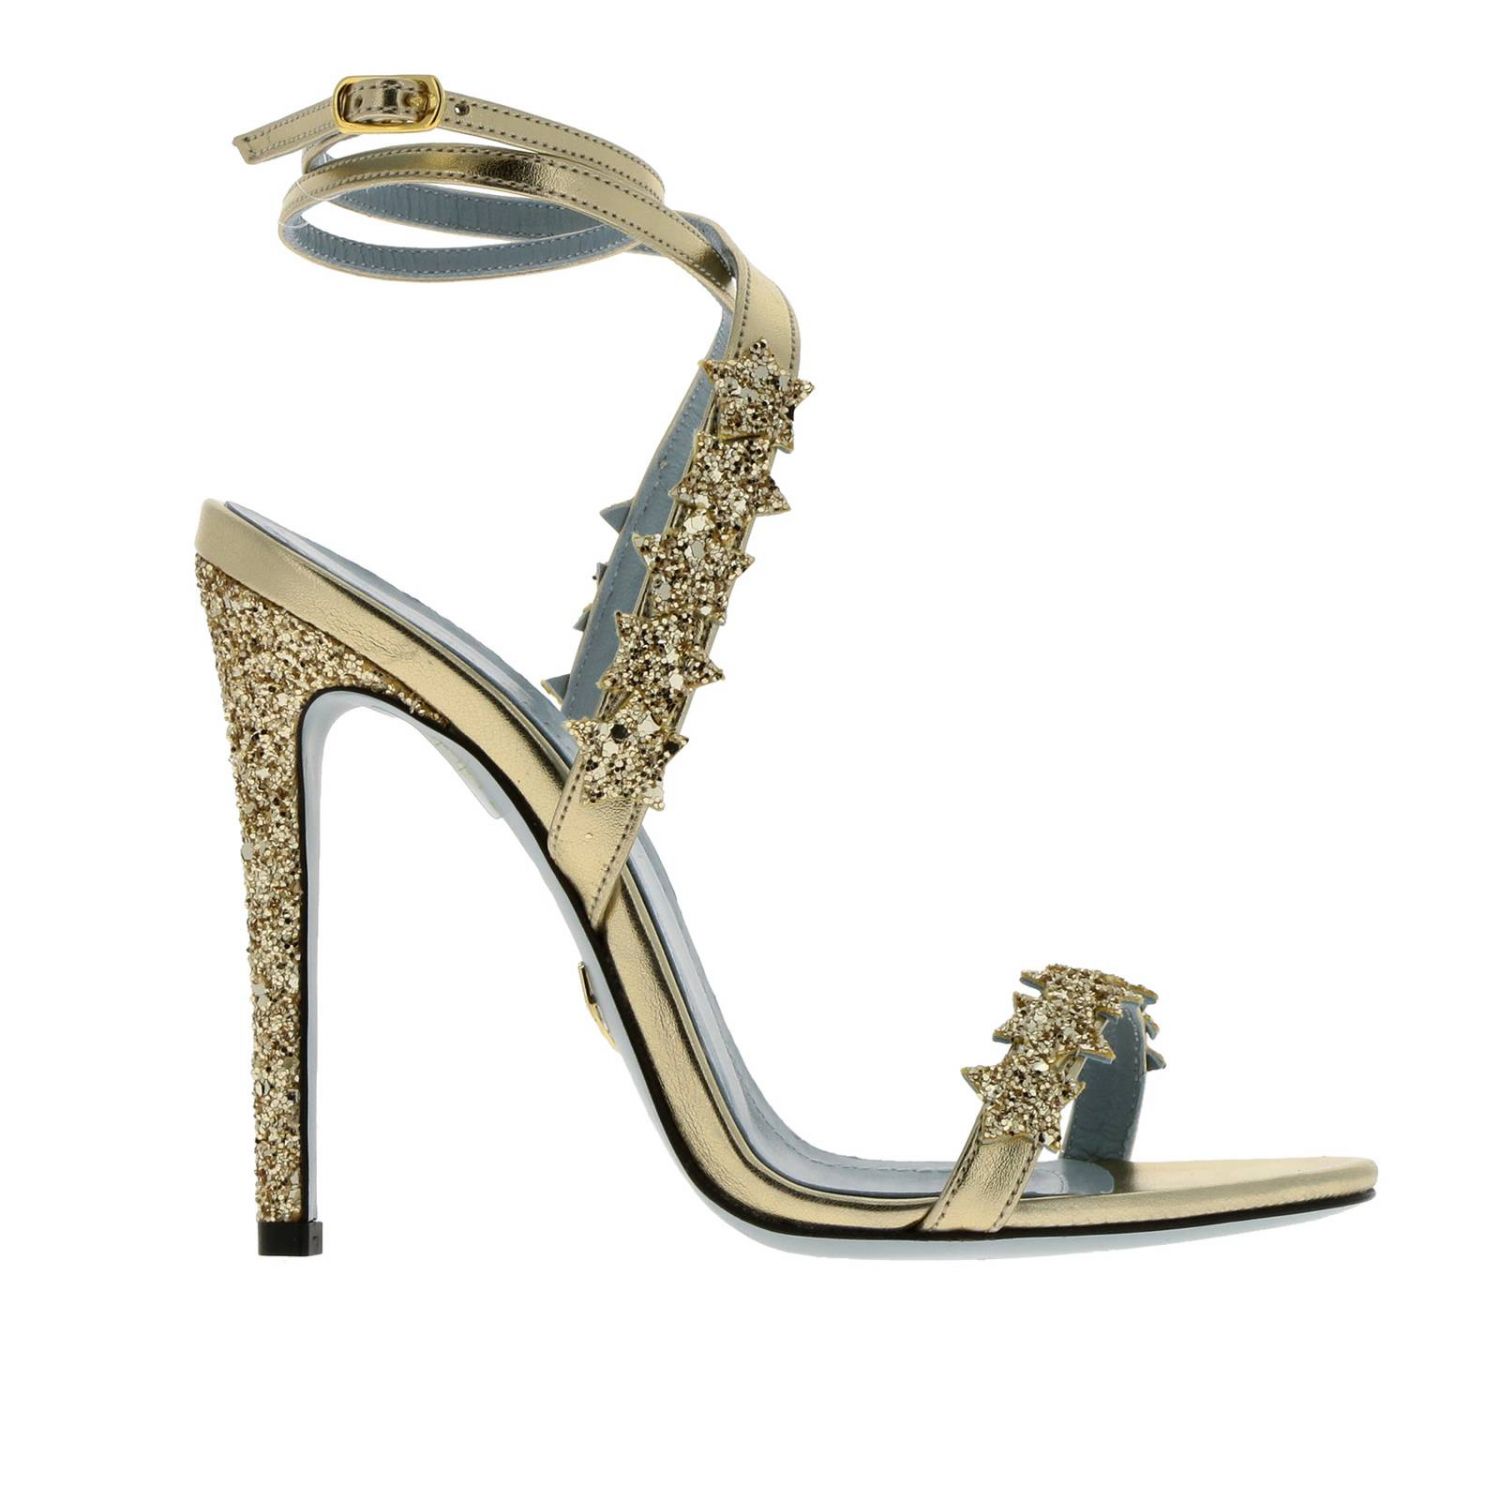 Chiara Ferragni Outlet: High heel shoes women | High Heel Shoes Chiara ...